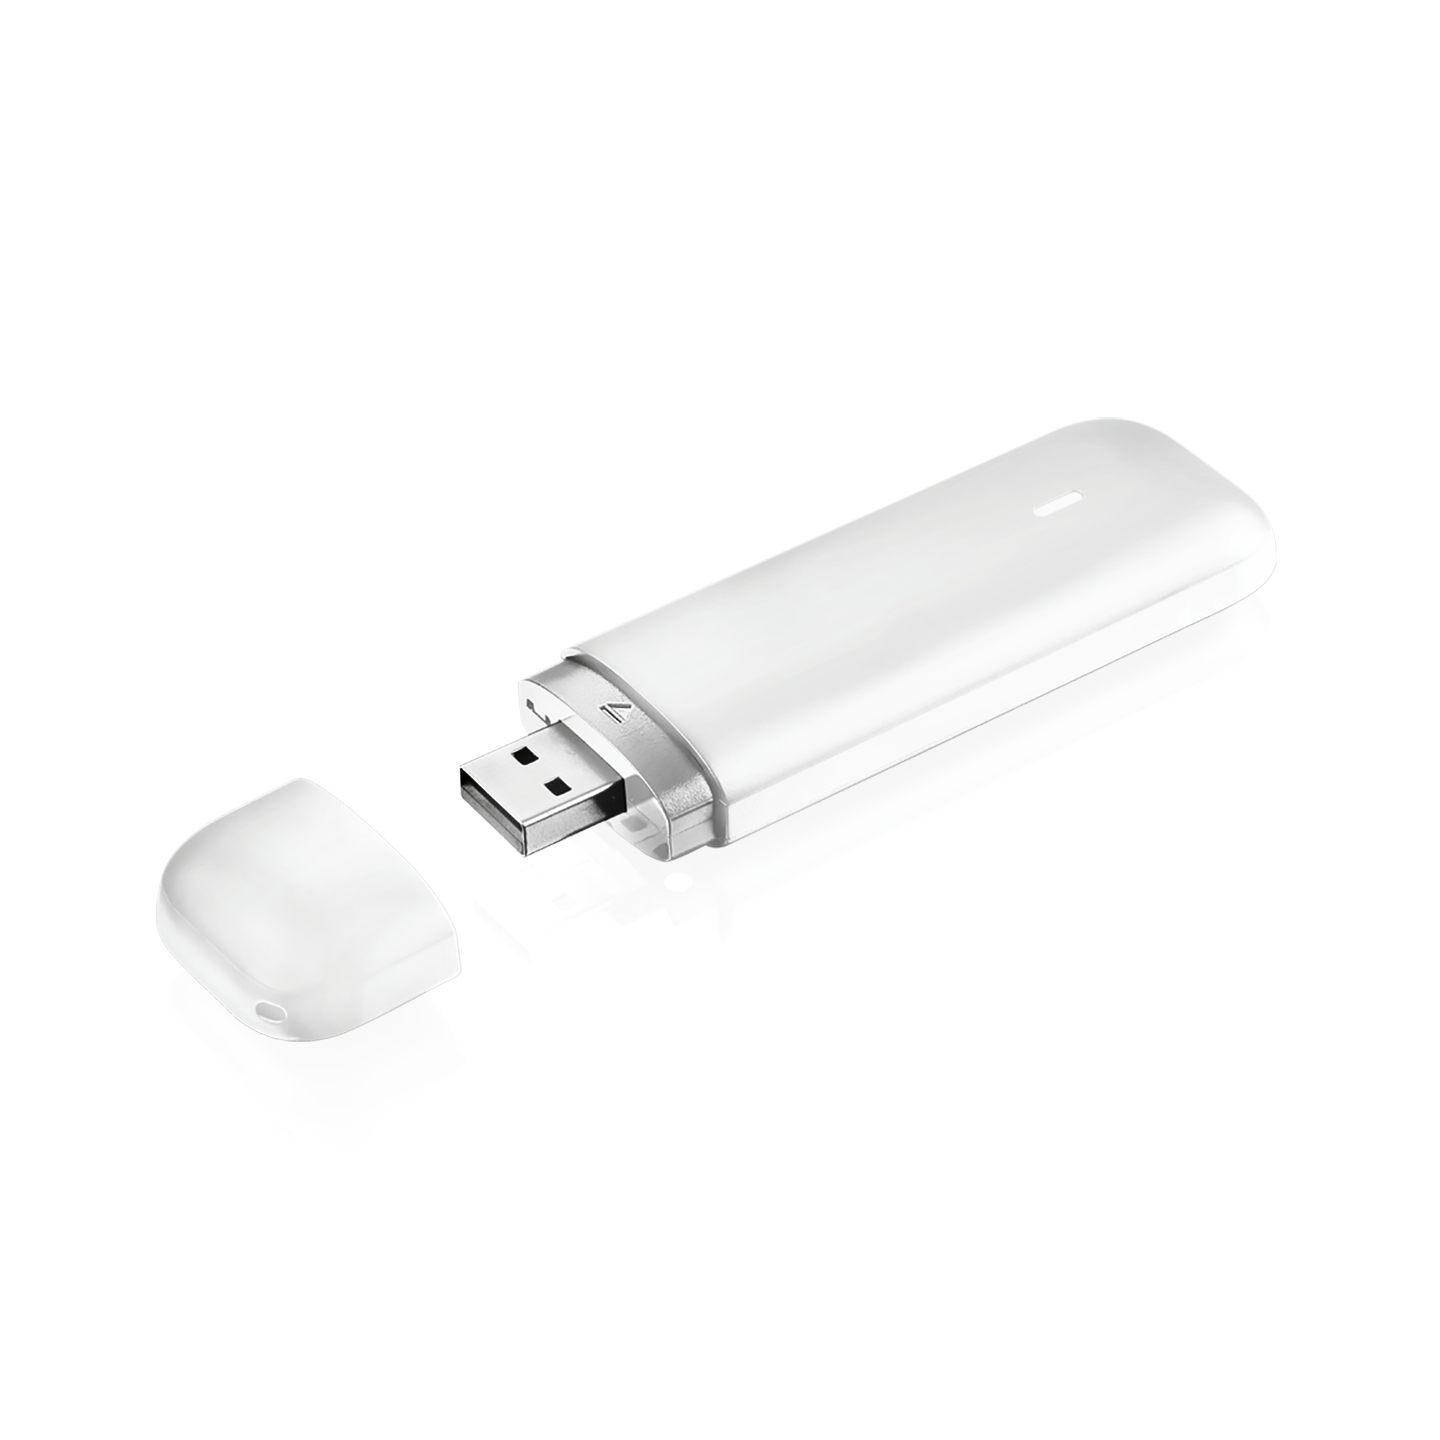 CU8210-D004-0200 | LTE USB stick for North America, Europe, Taiwan, Australia, New Zealand